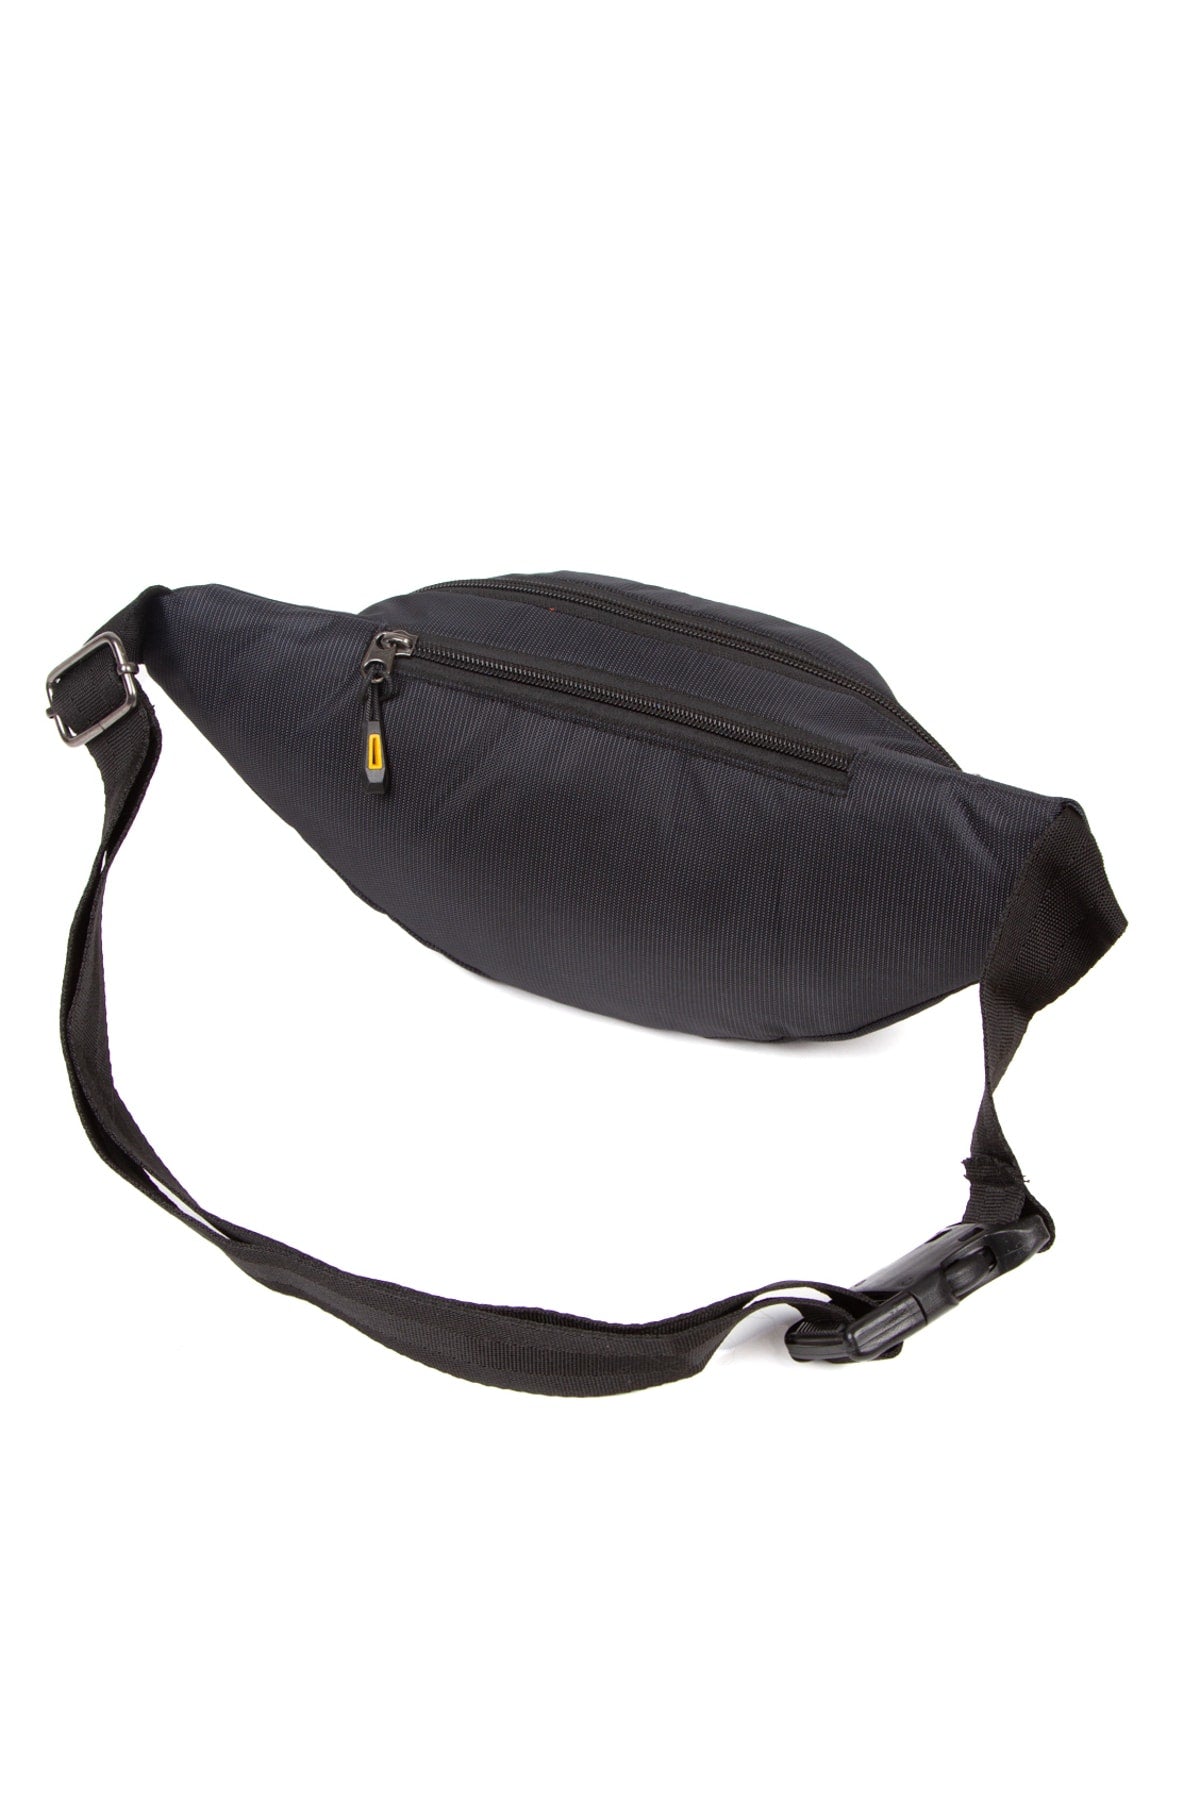 Unisex Impertex Fabric Headphone Outlet Waterproof Shoulder And Waist Bag Cross Strap Black Color